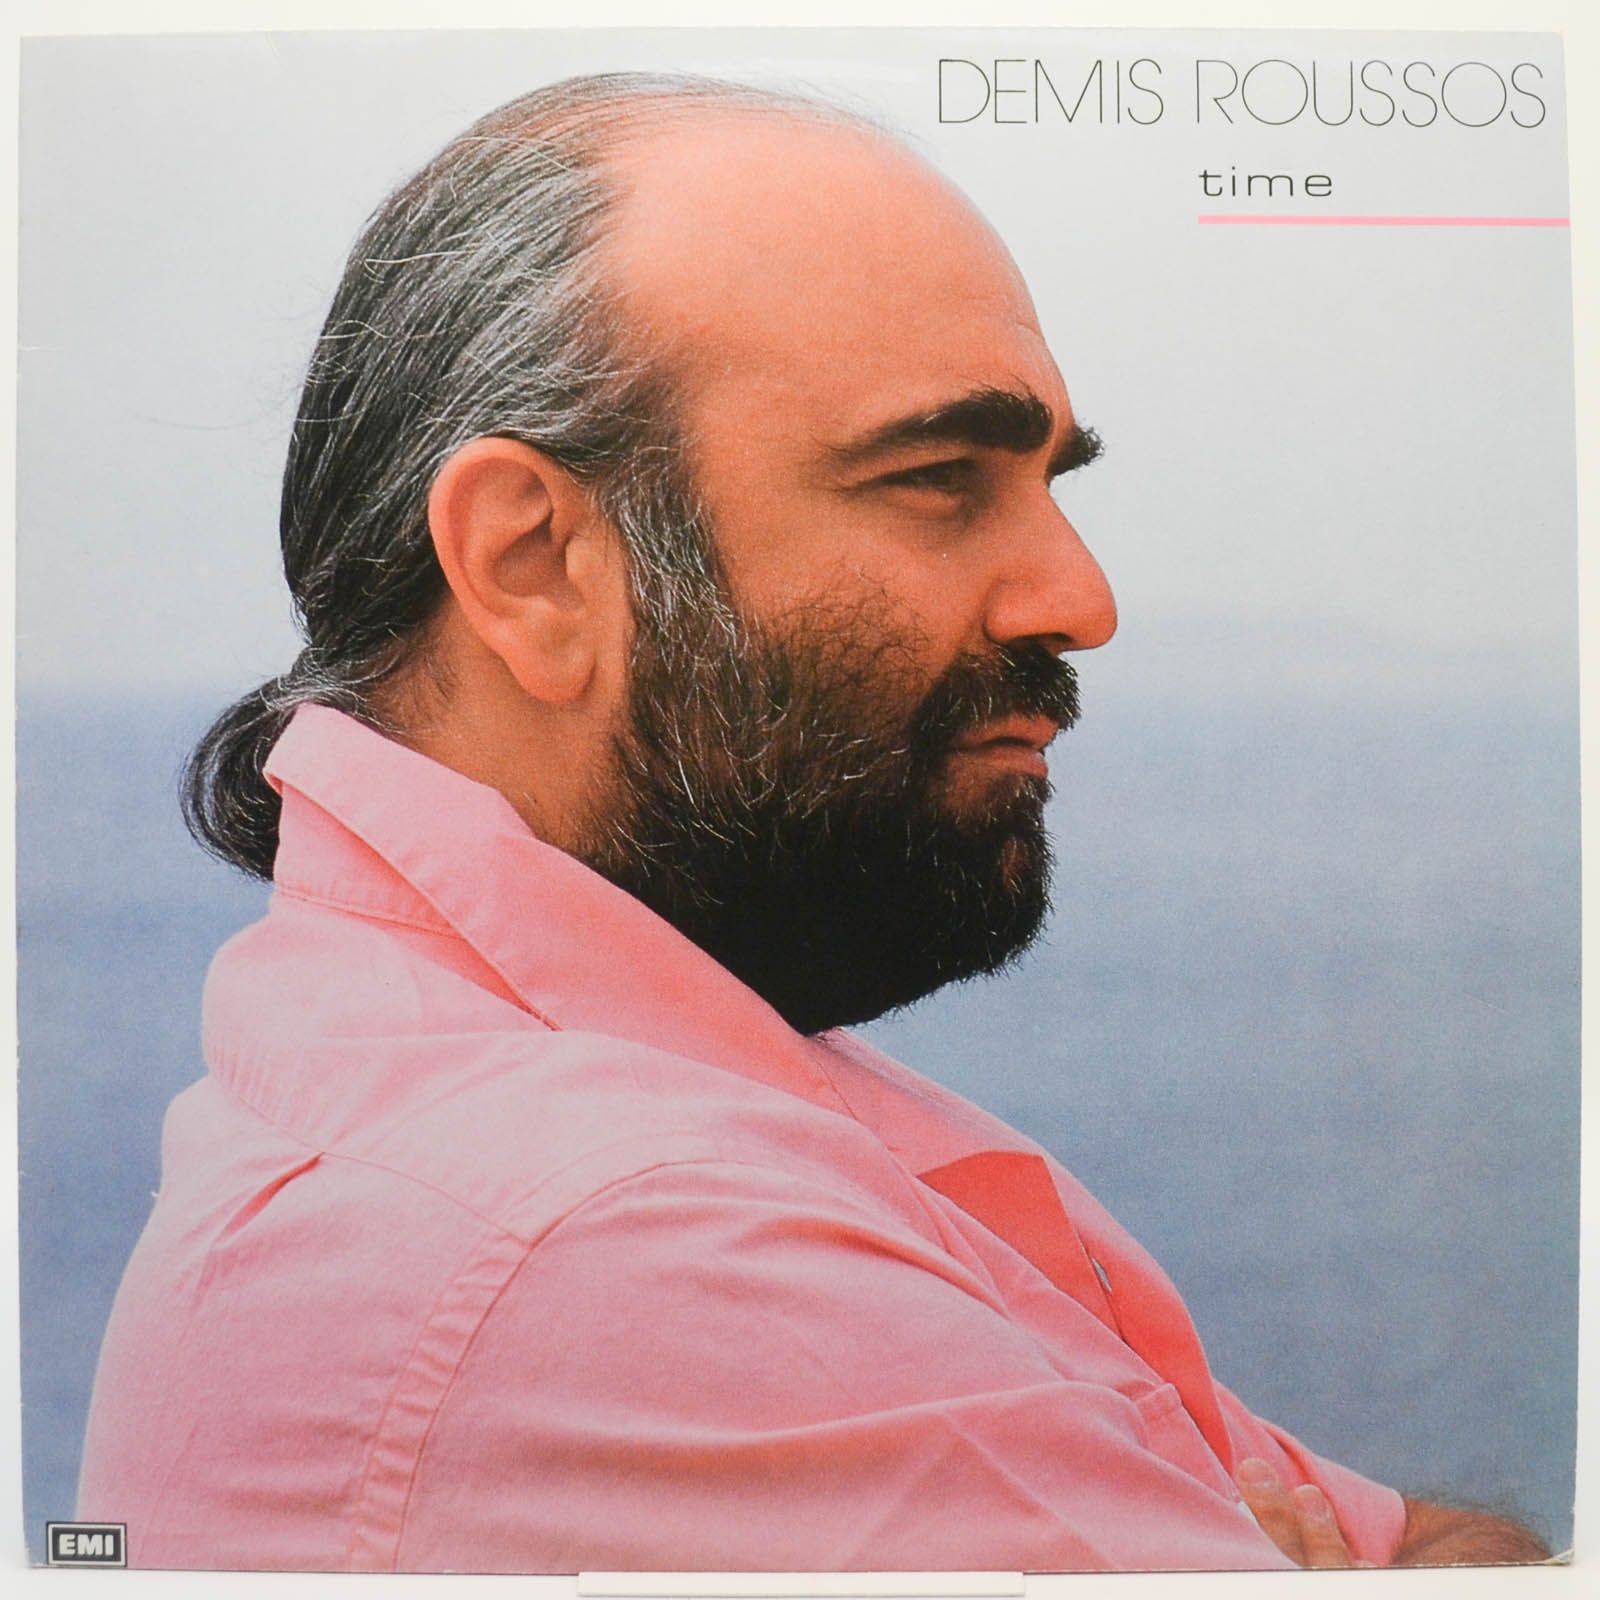 Demis Roussos — Time, 1988